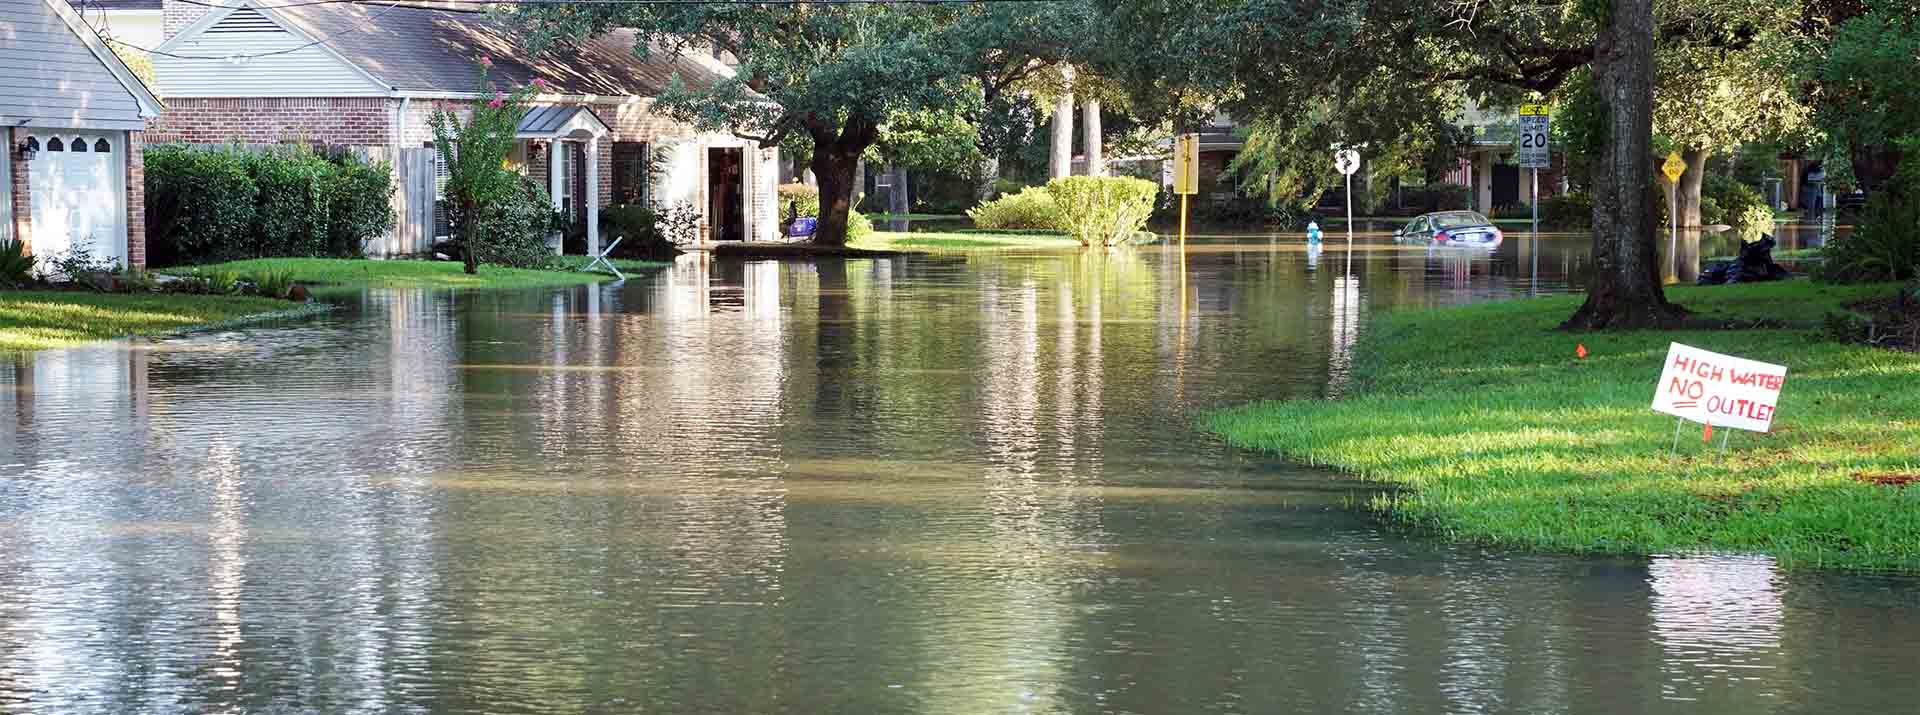 Personal Flood Insurance